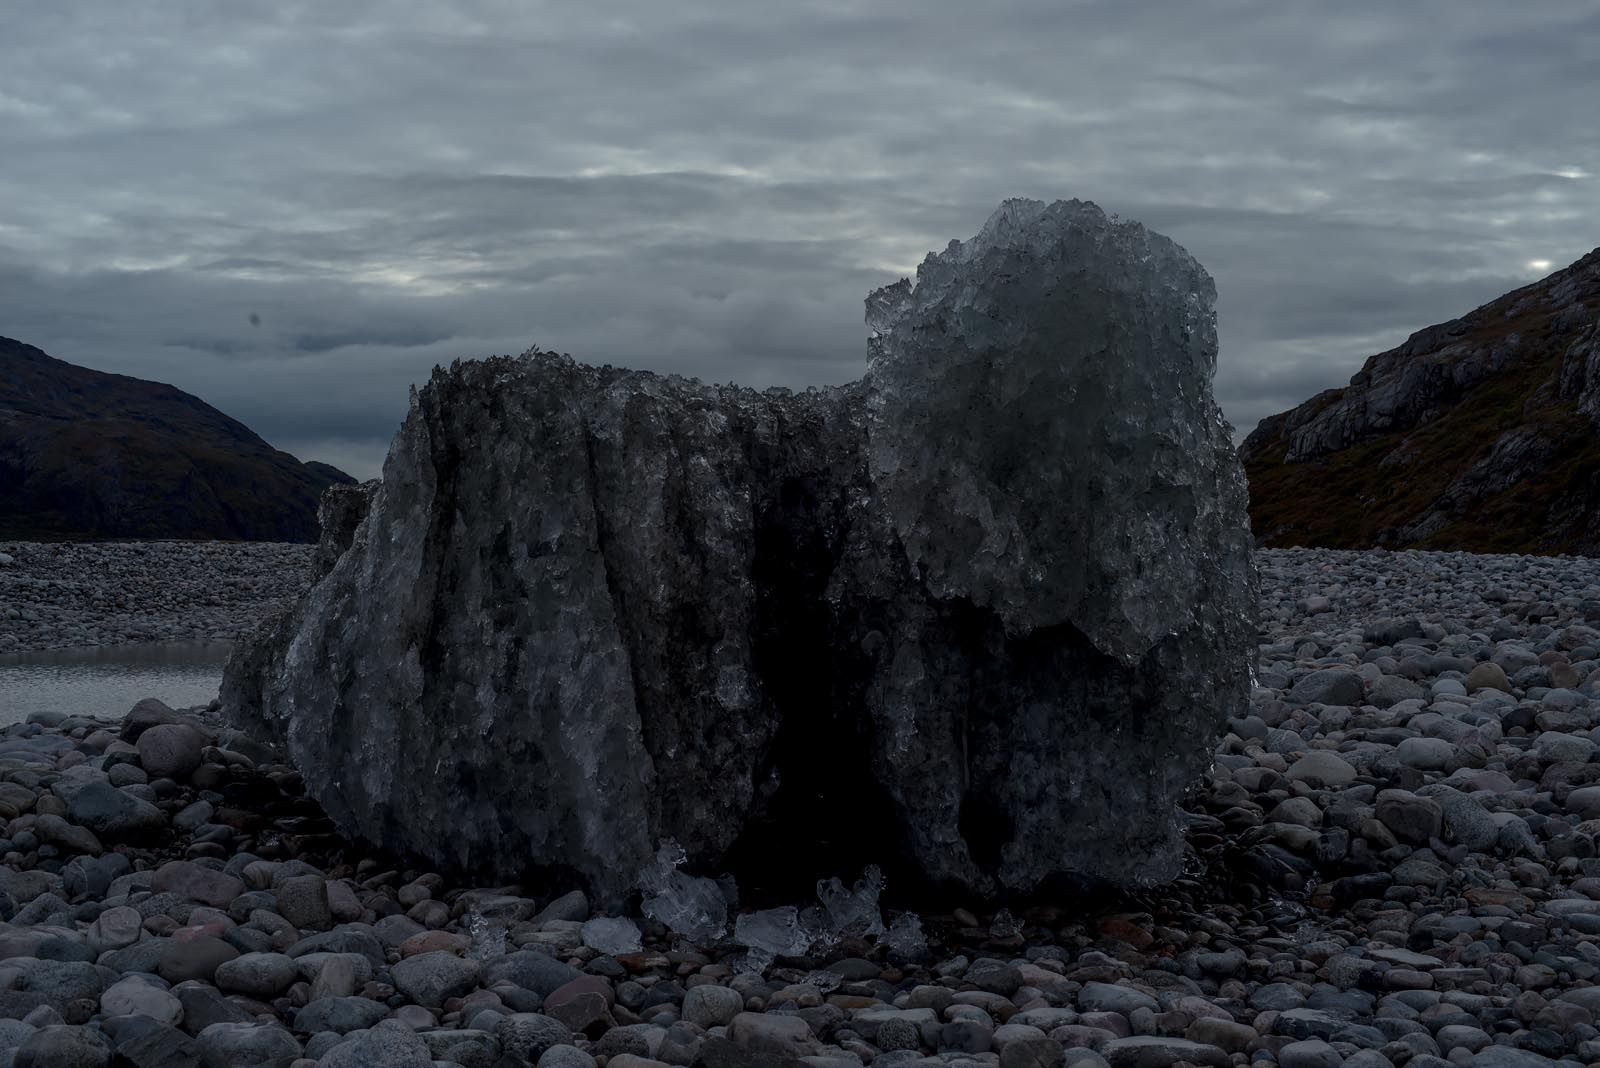 Darkland: Ethereal Greenland at Night (ice break)